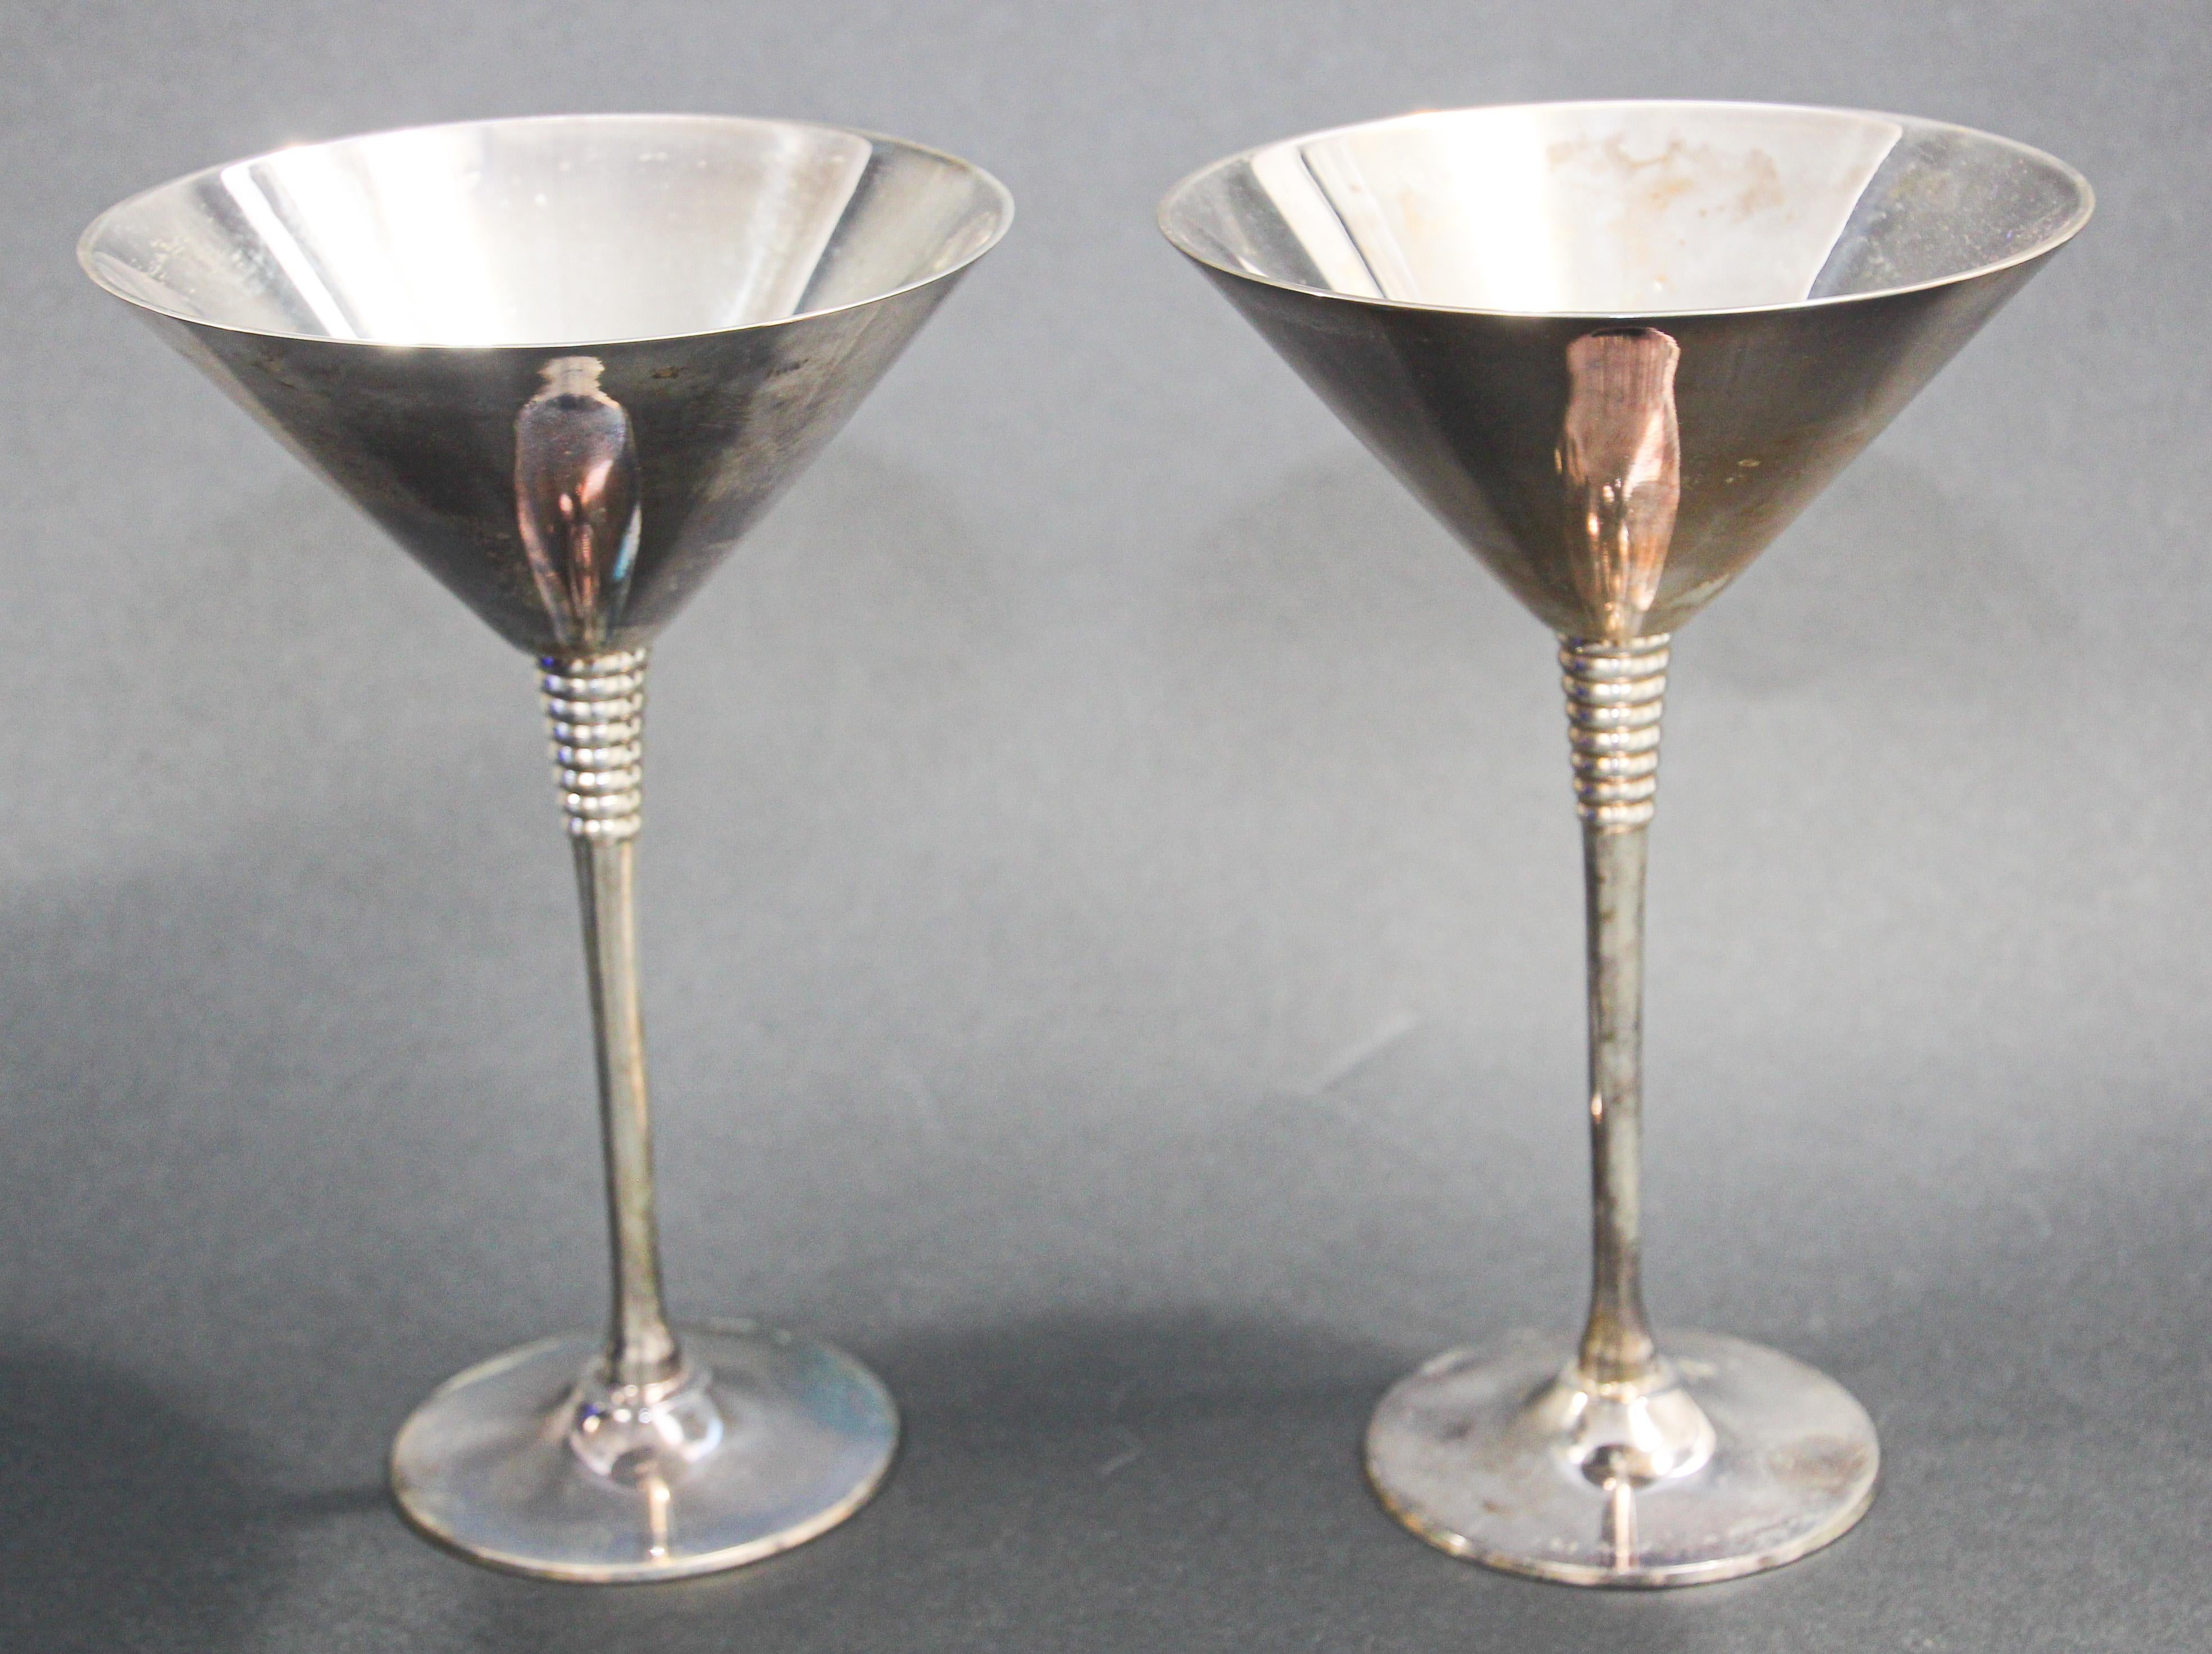 20th Century Collectible Martini Glasses from the Flamingo Las Vegas Casino